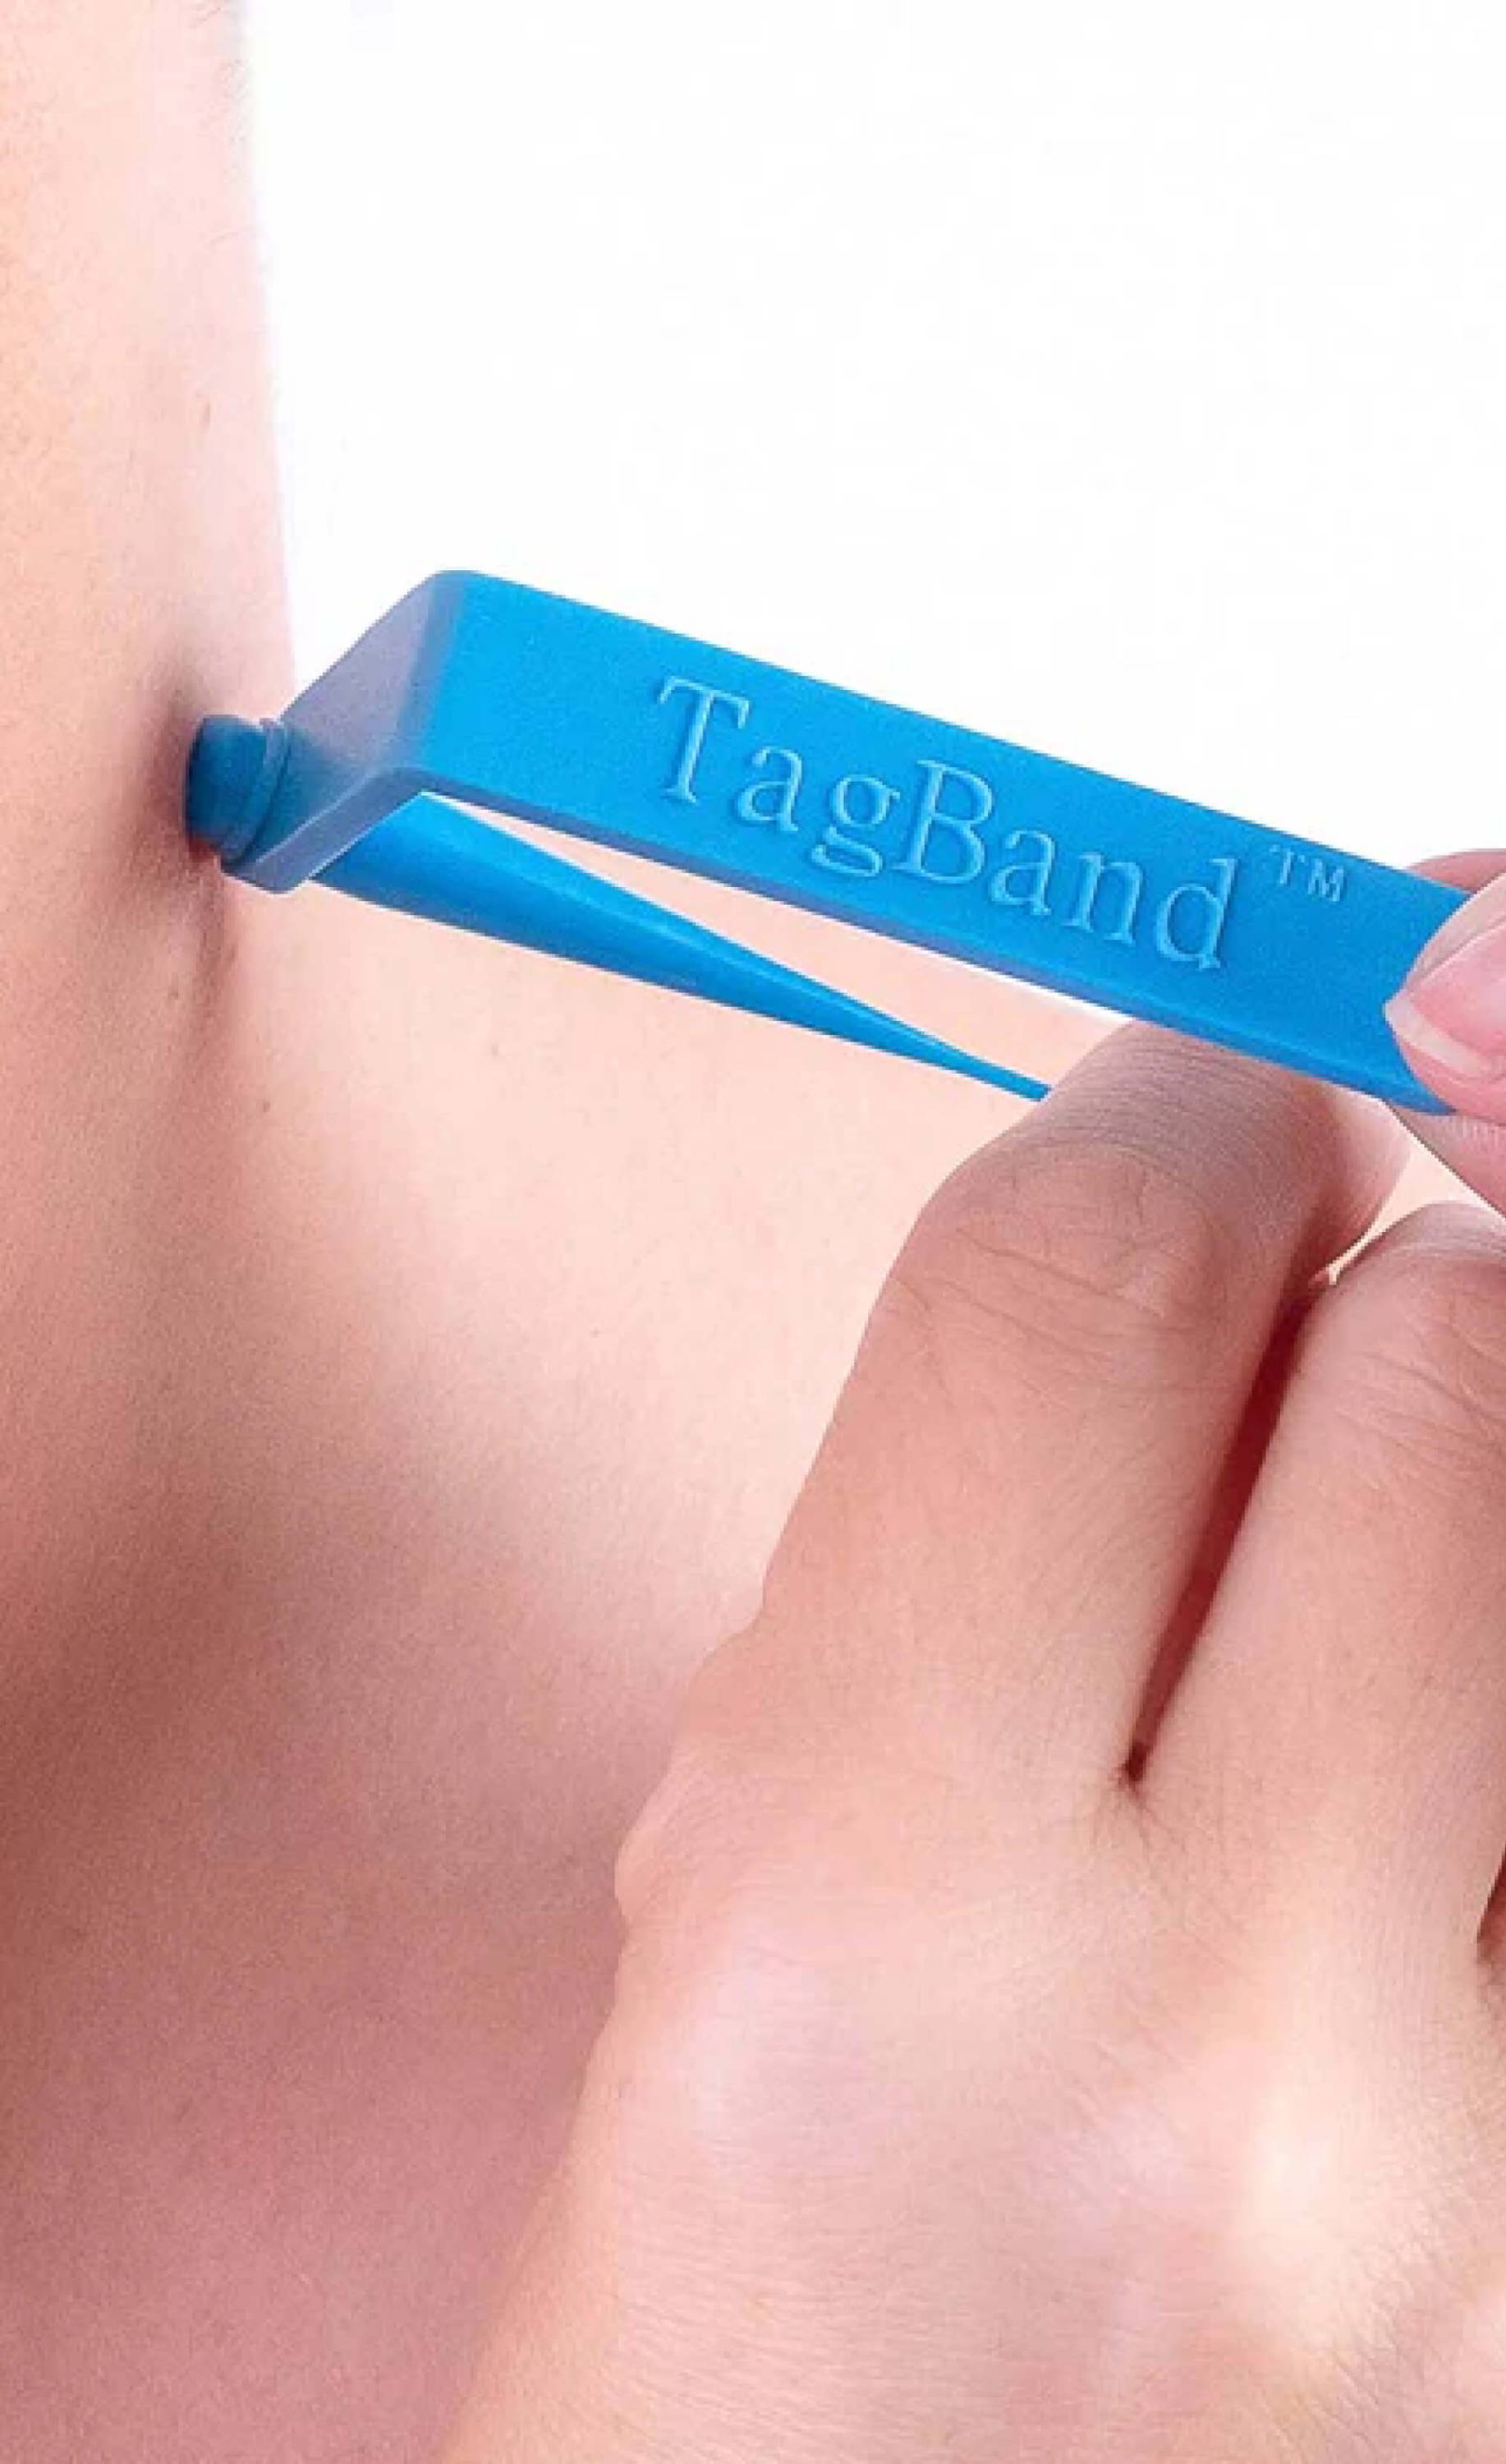 TagBand Skin Tag Removal Kit